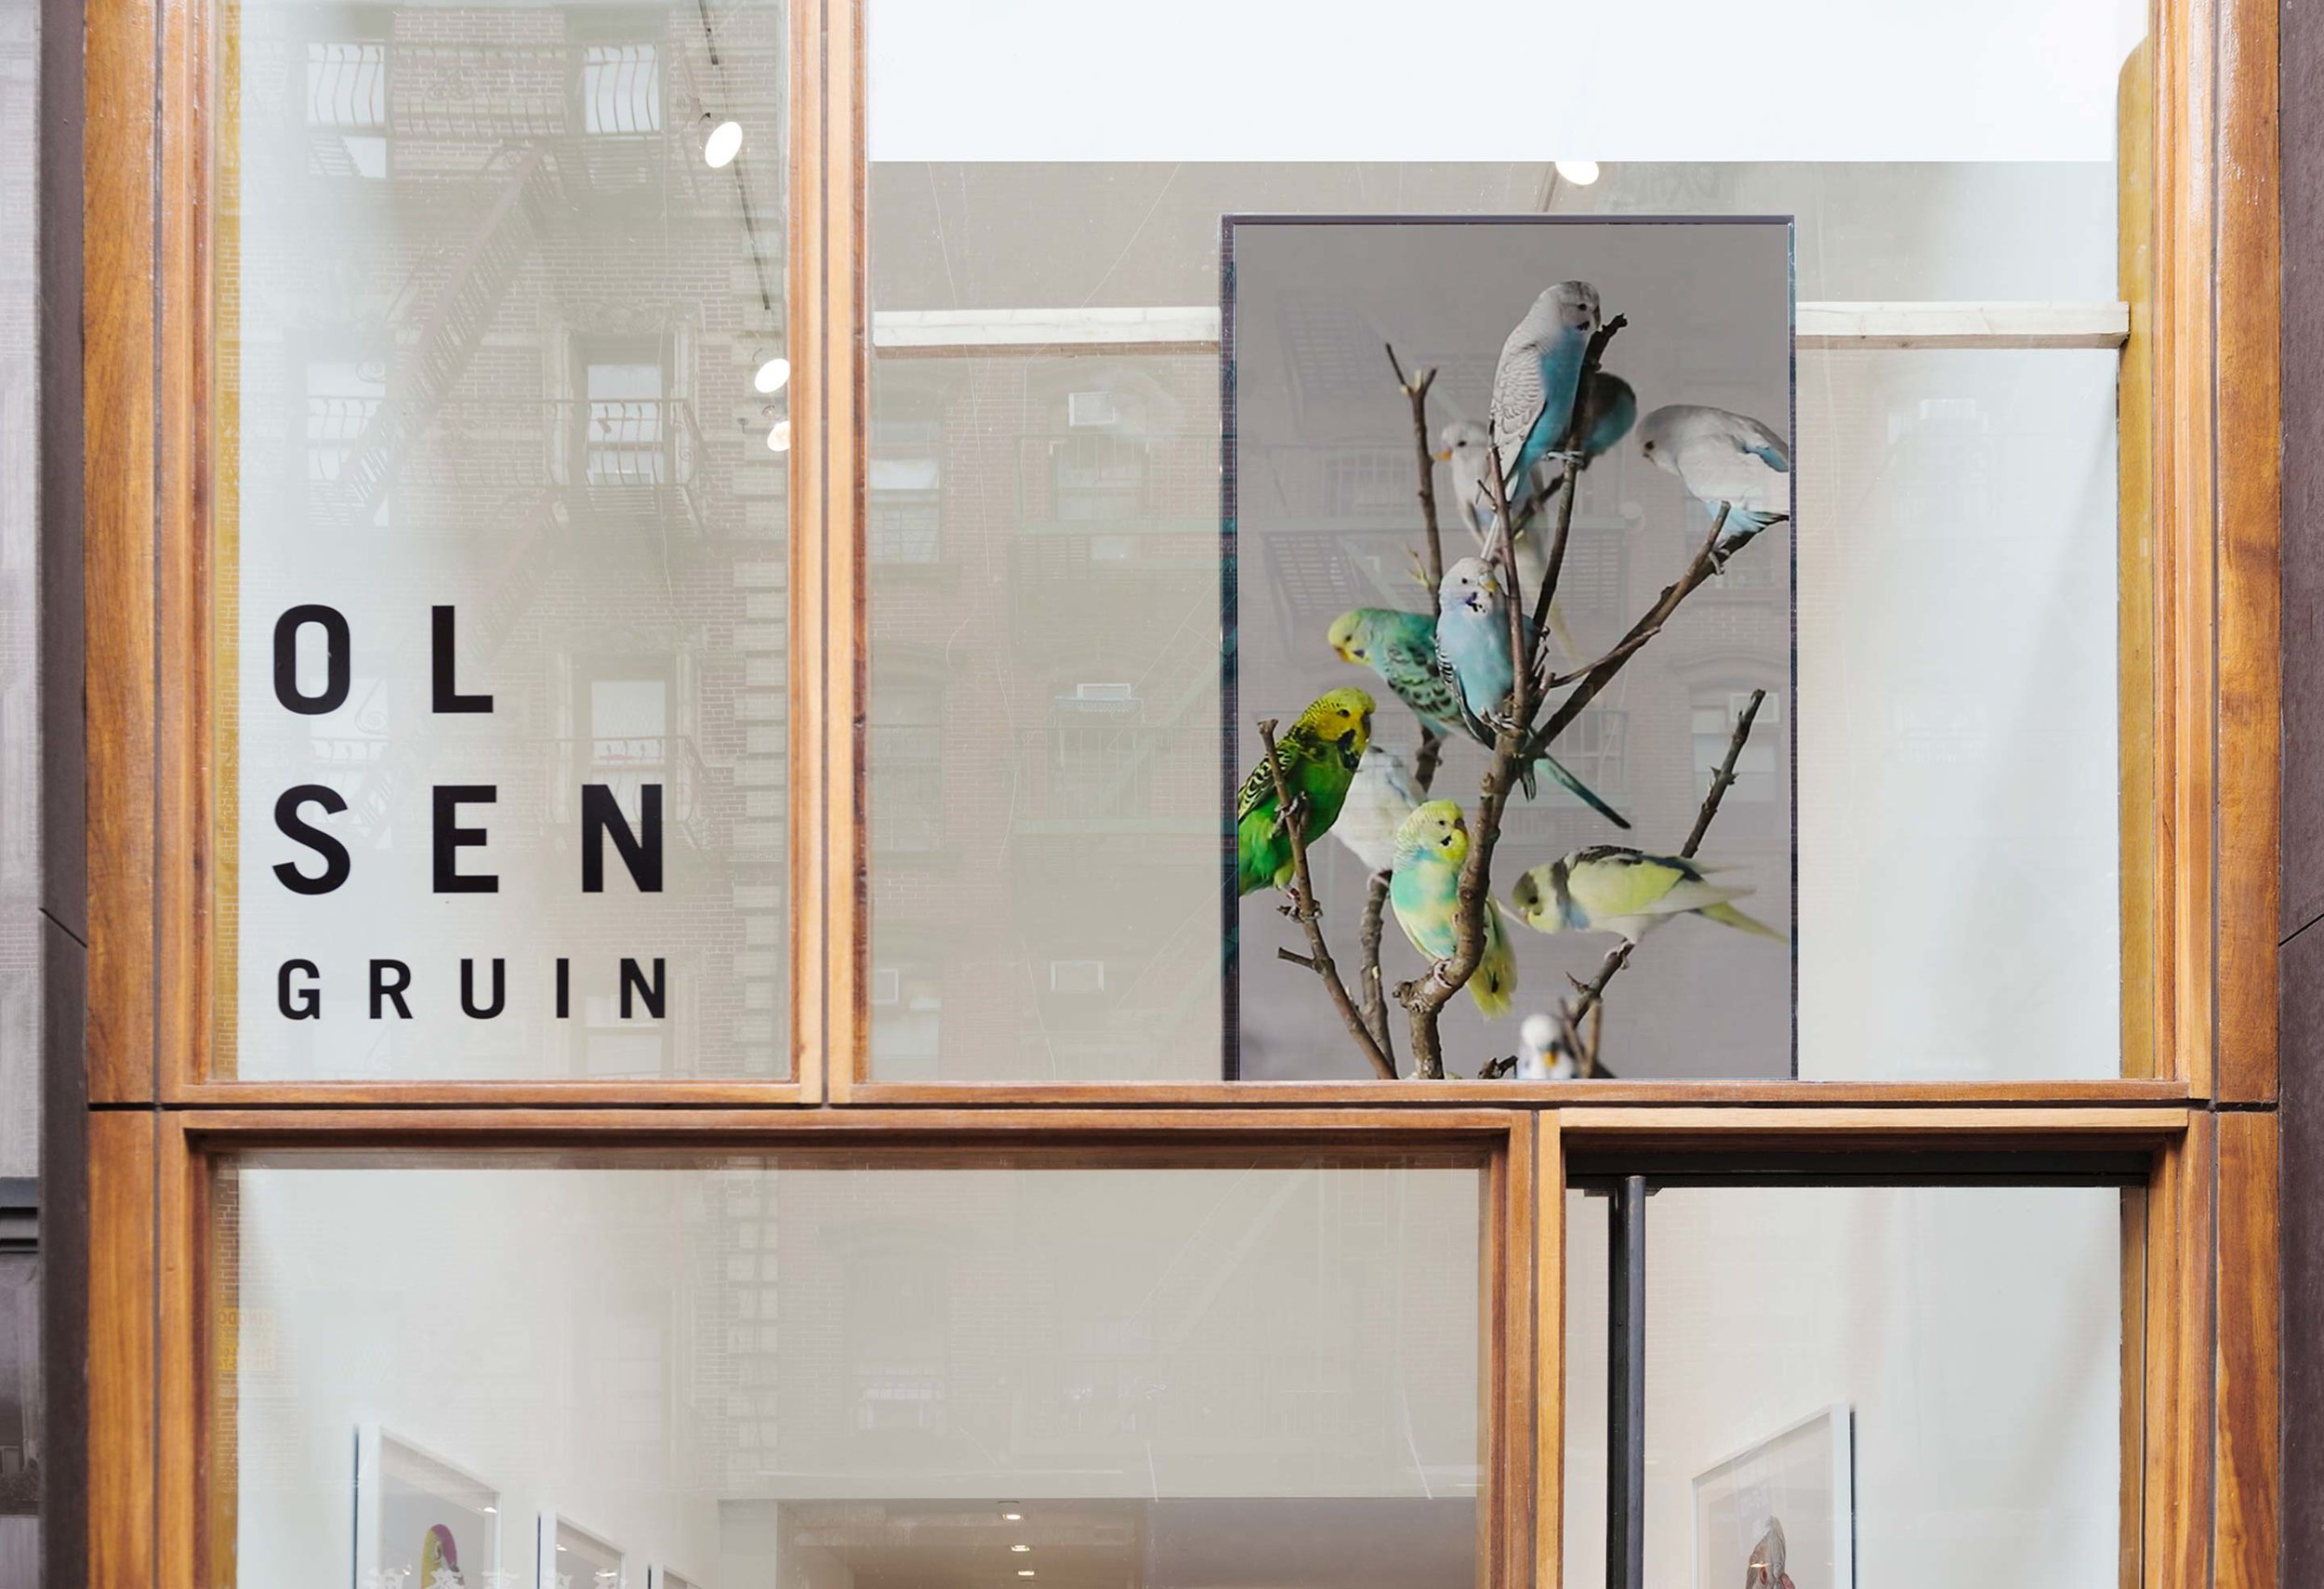 Installation view, Ornithurae, 2017, Olsen Gruin Gallery, New York